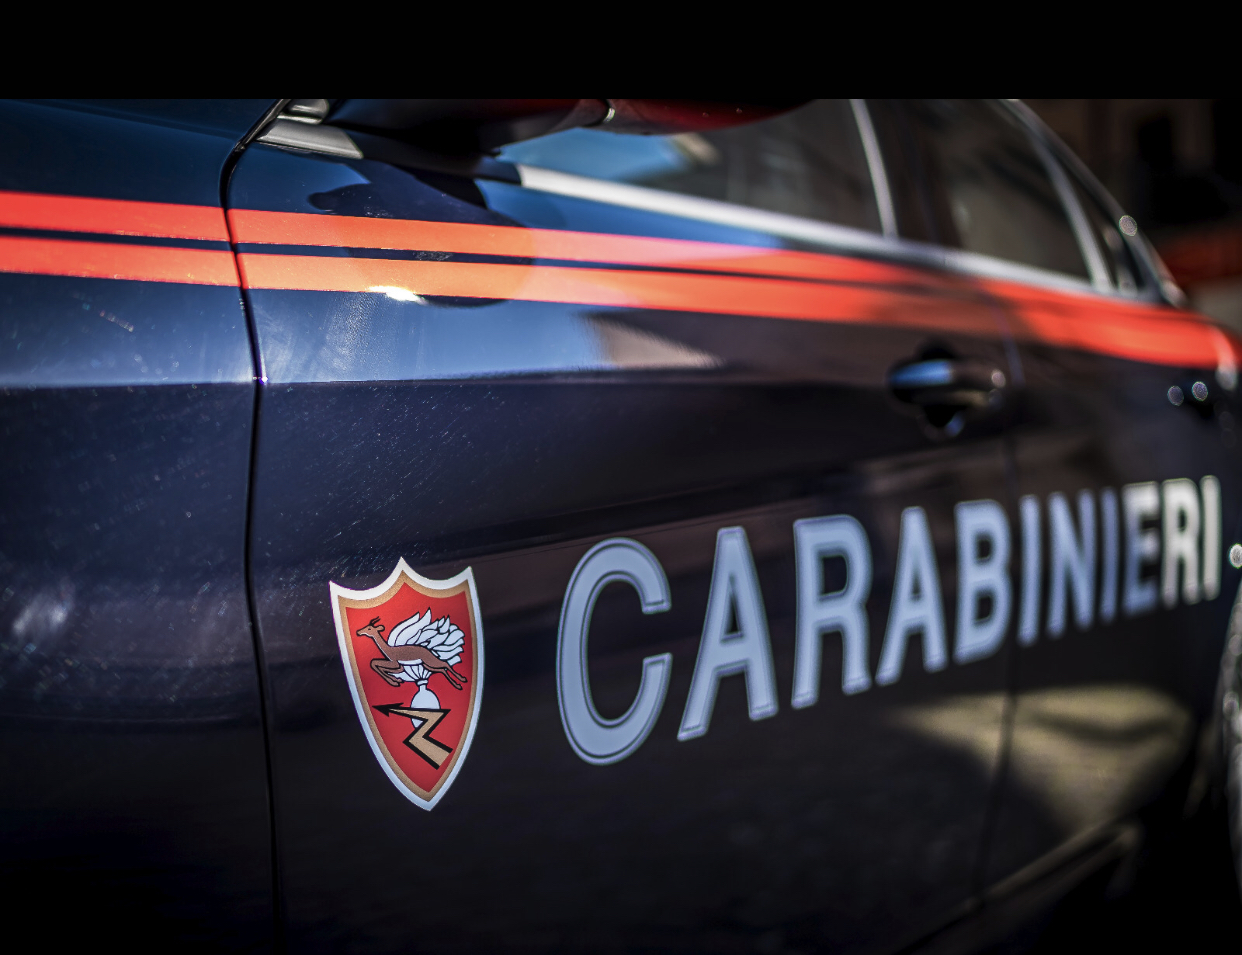 Carabinieribellax